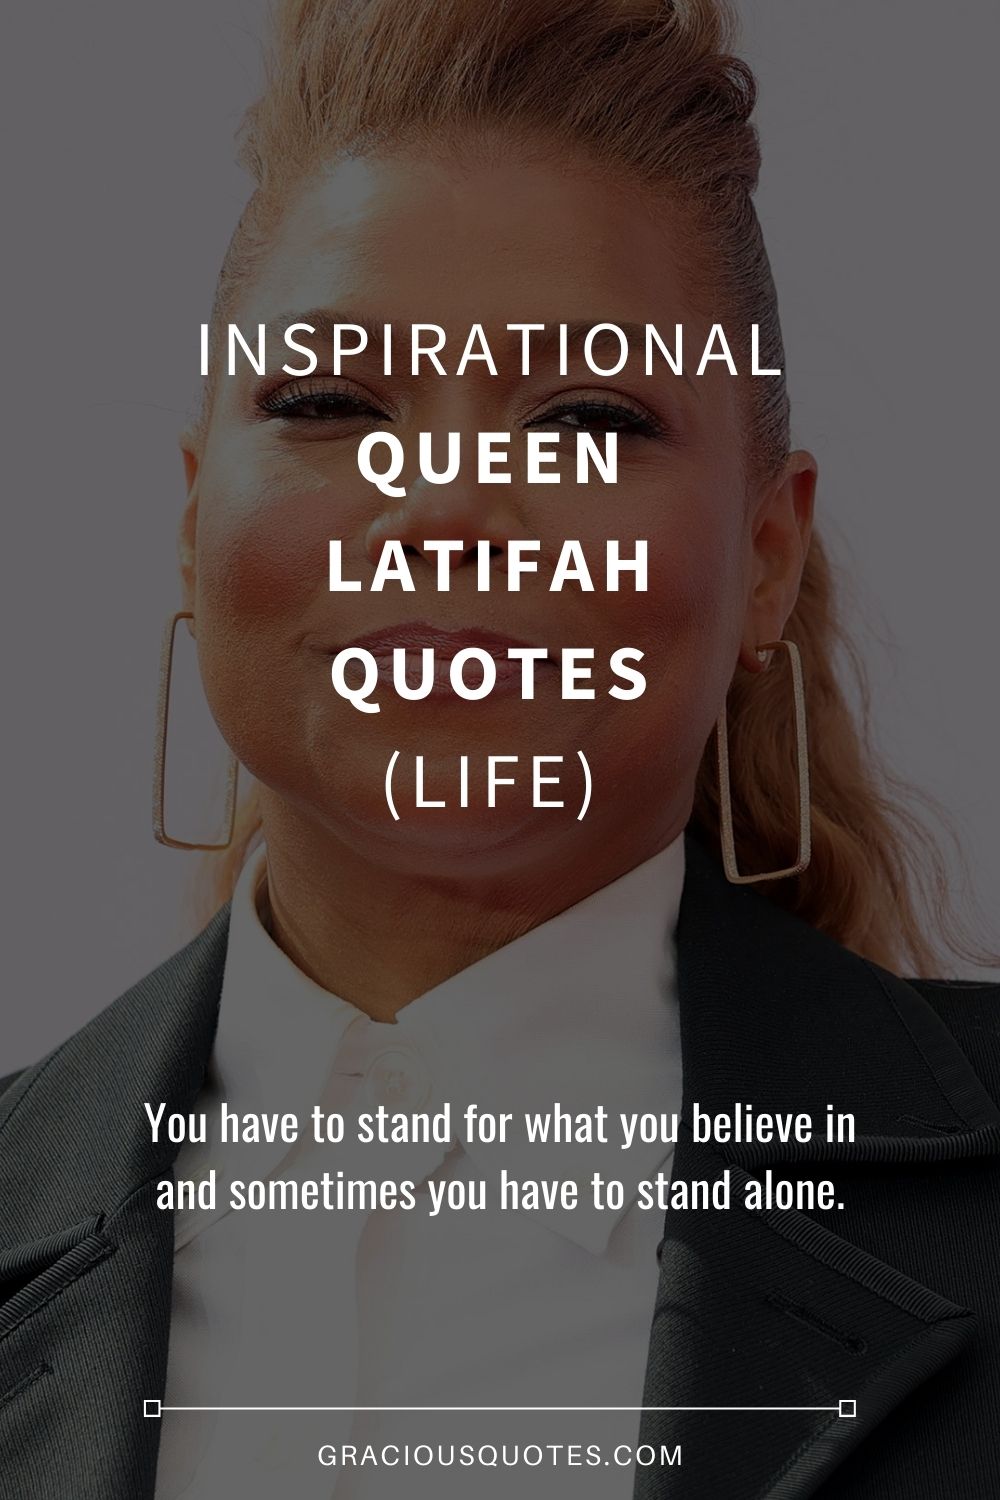 Inspirational Queen Latifah Quotes (LIFE) - Gracious Quotes